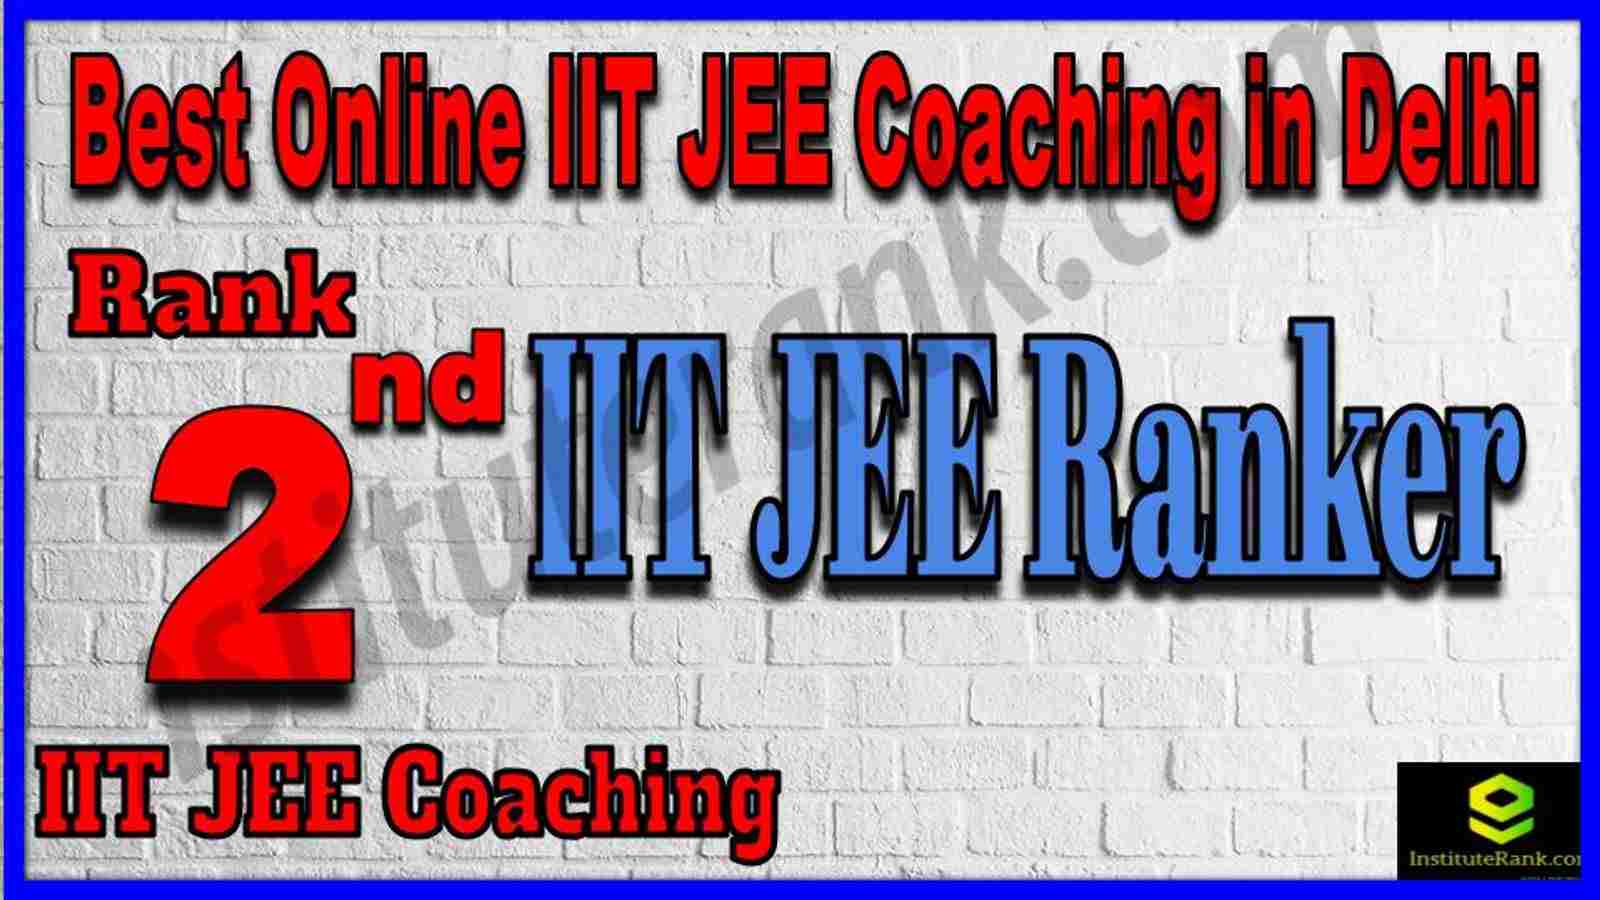 Rank 2nd Best Online IIT JEE Coaching Delhi